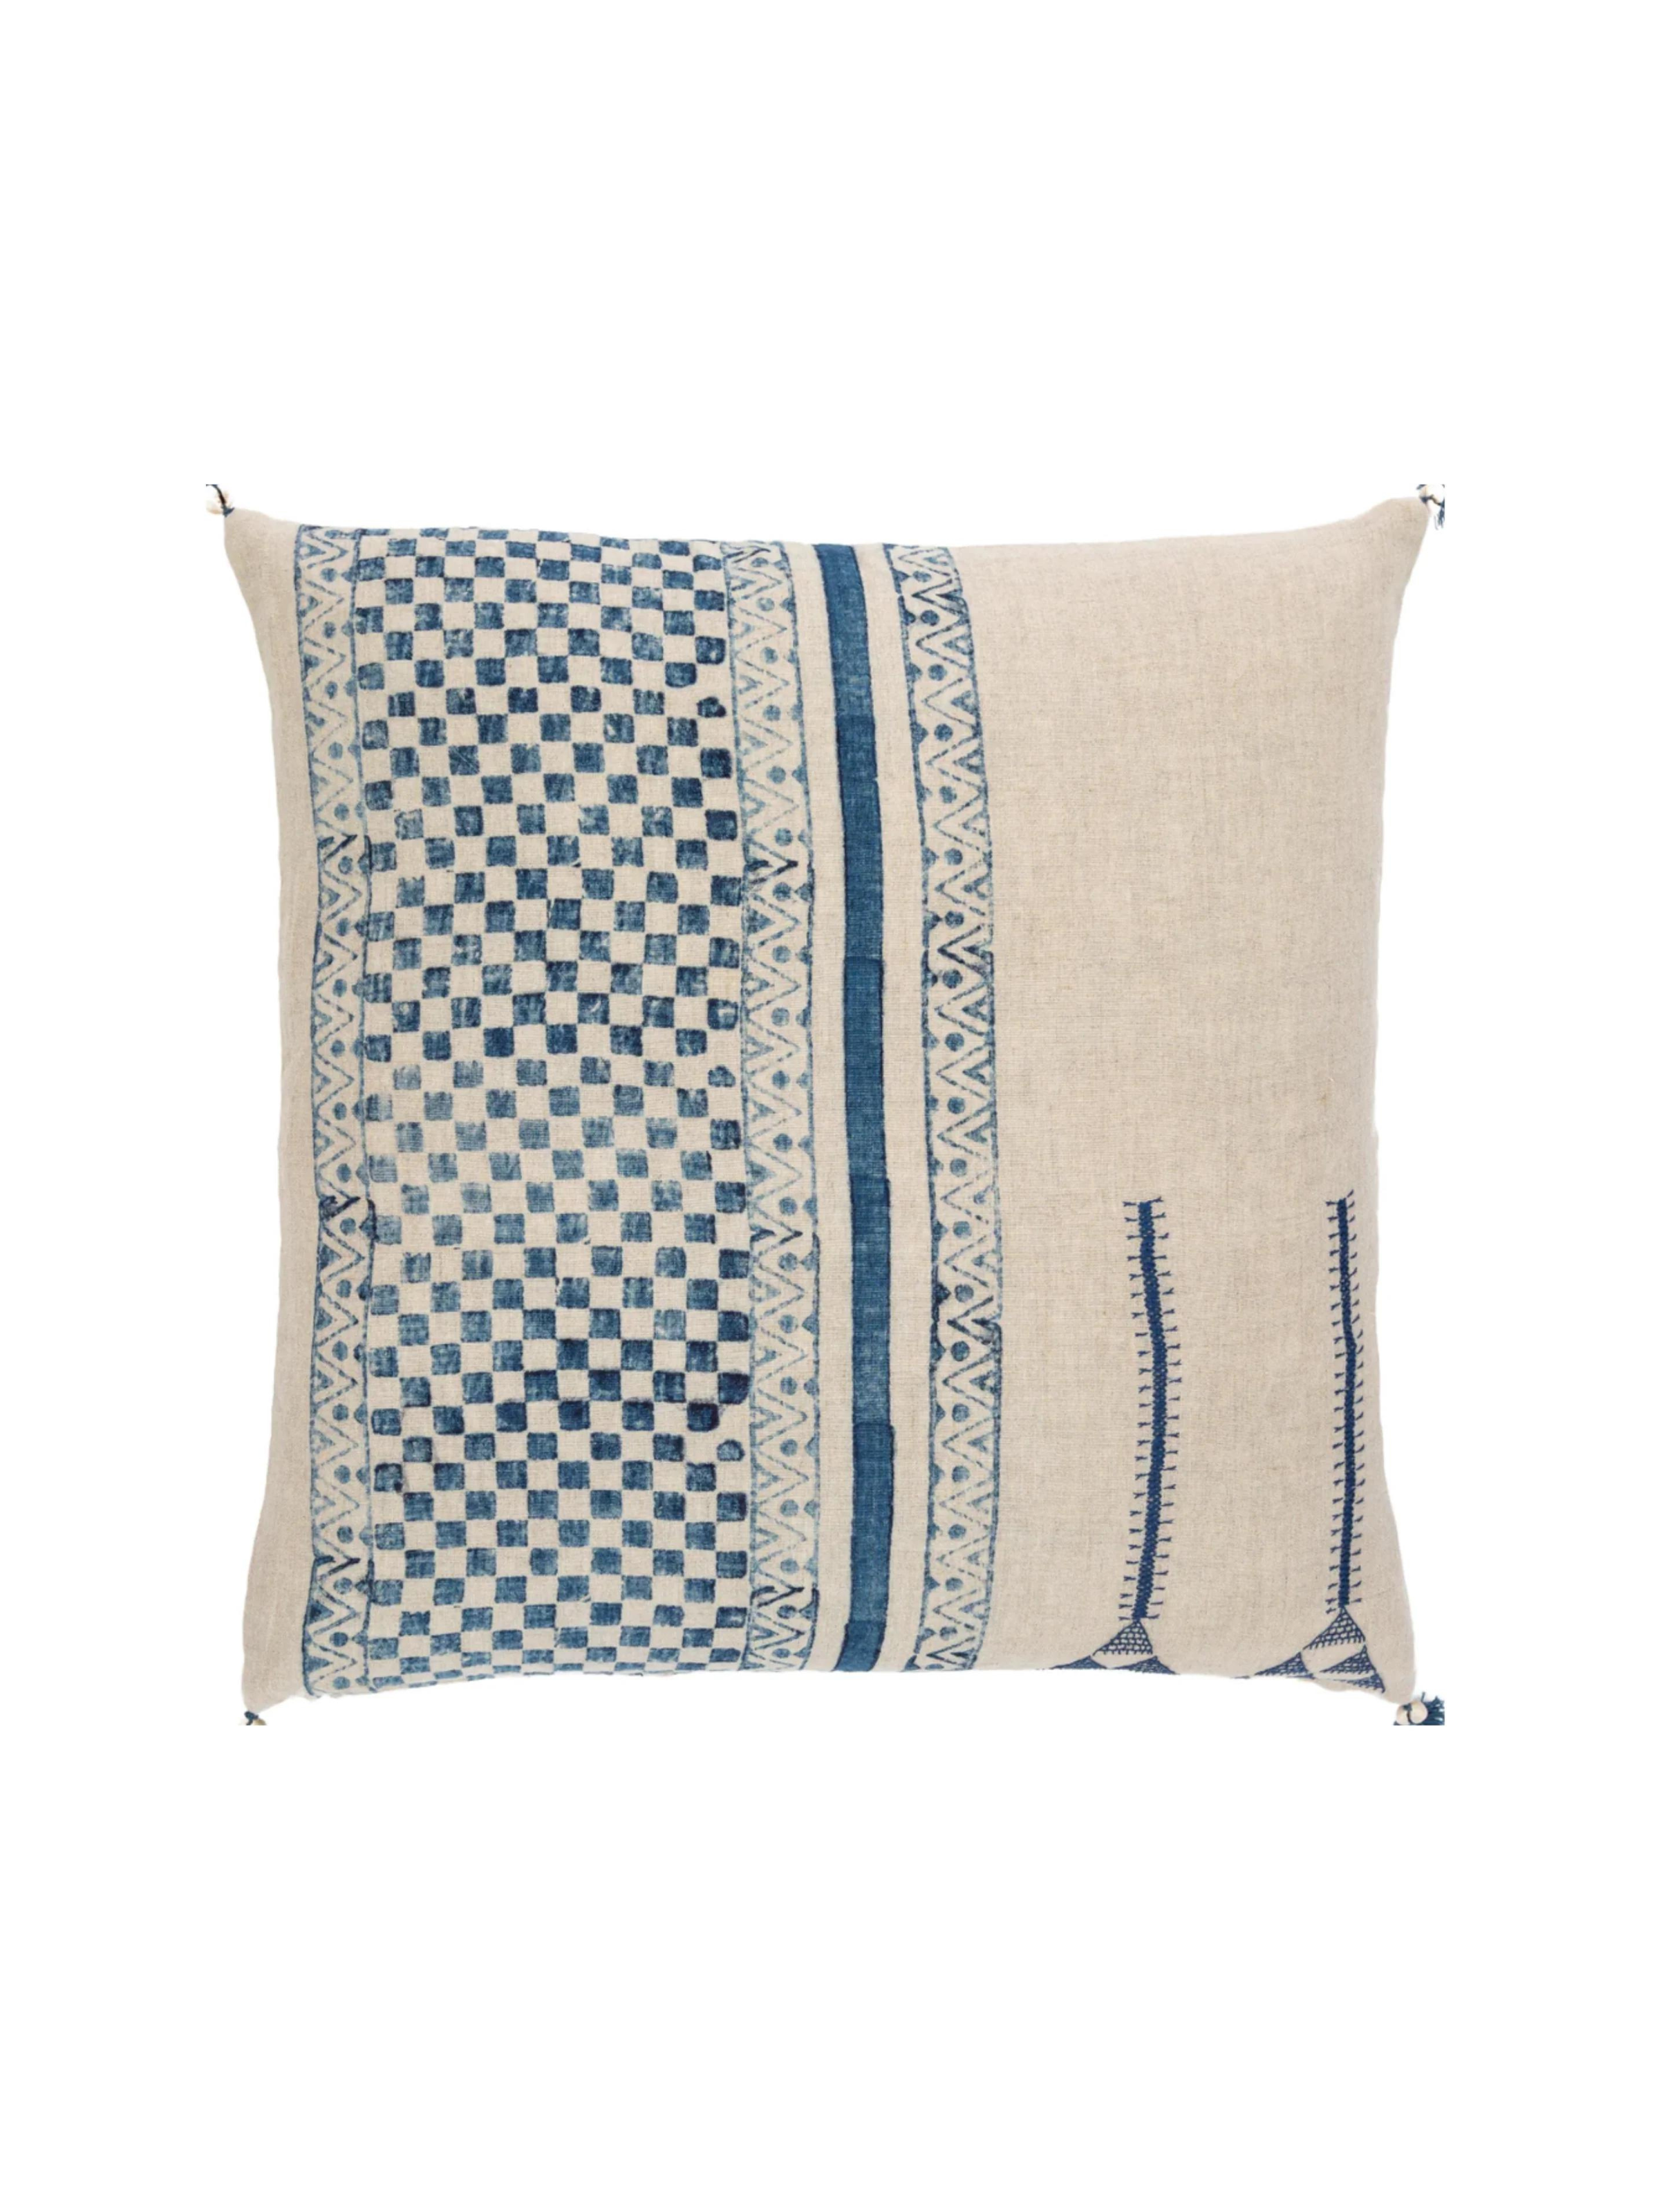 Samburu Indigo Decorative Pillow Cover